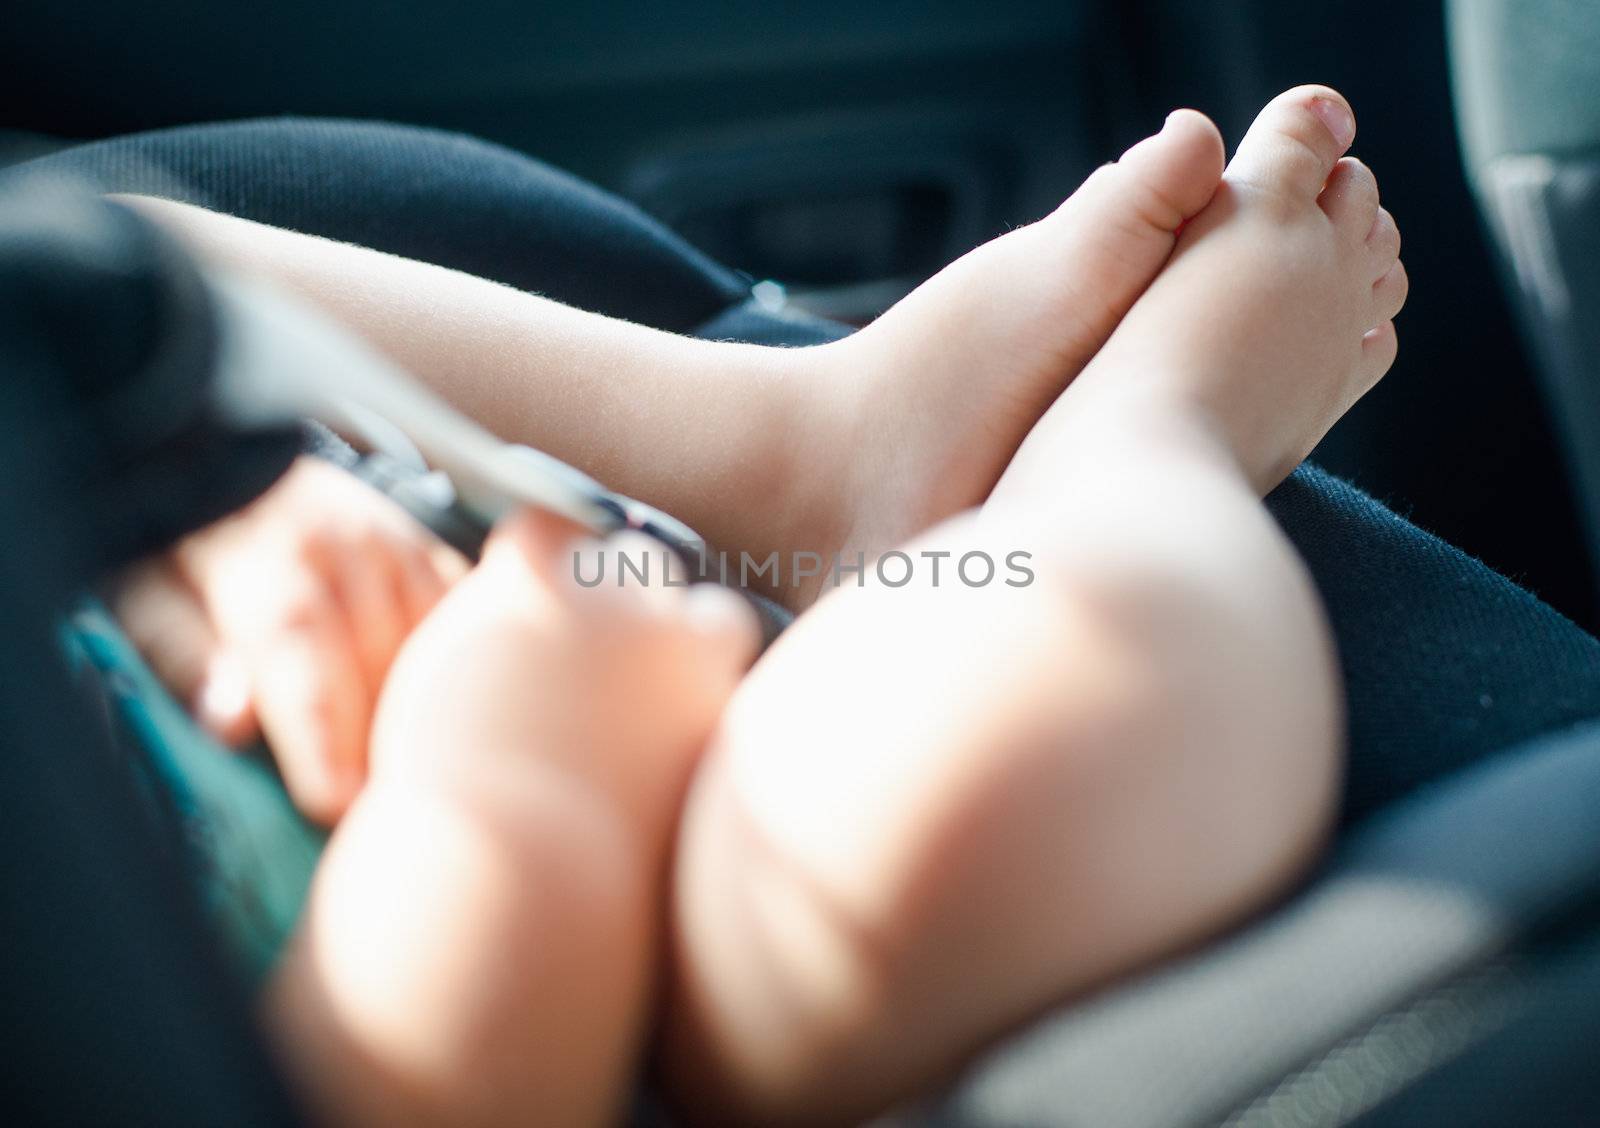  Baby Car Seat by Nickolya